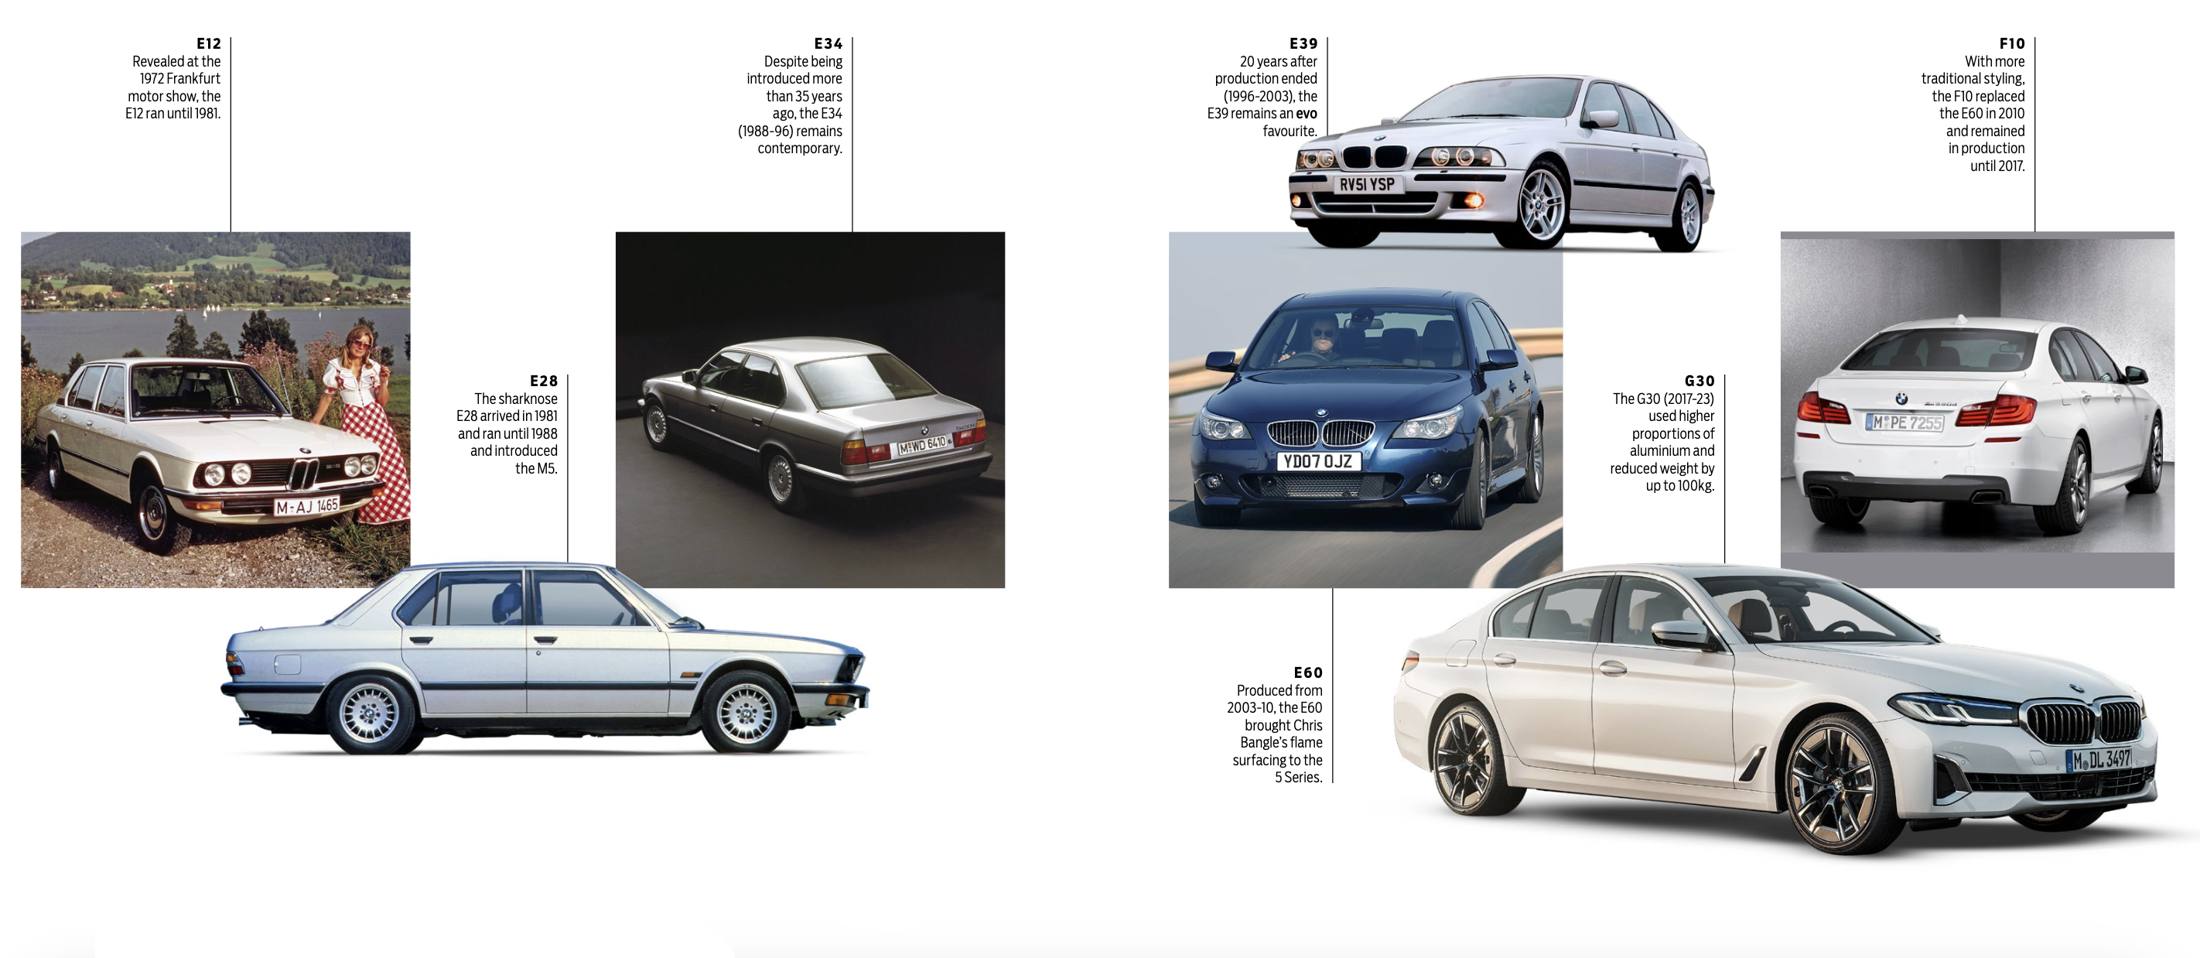 aria-label="BMW 5 series history"